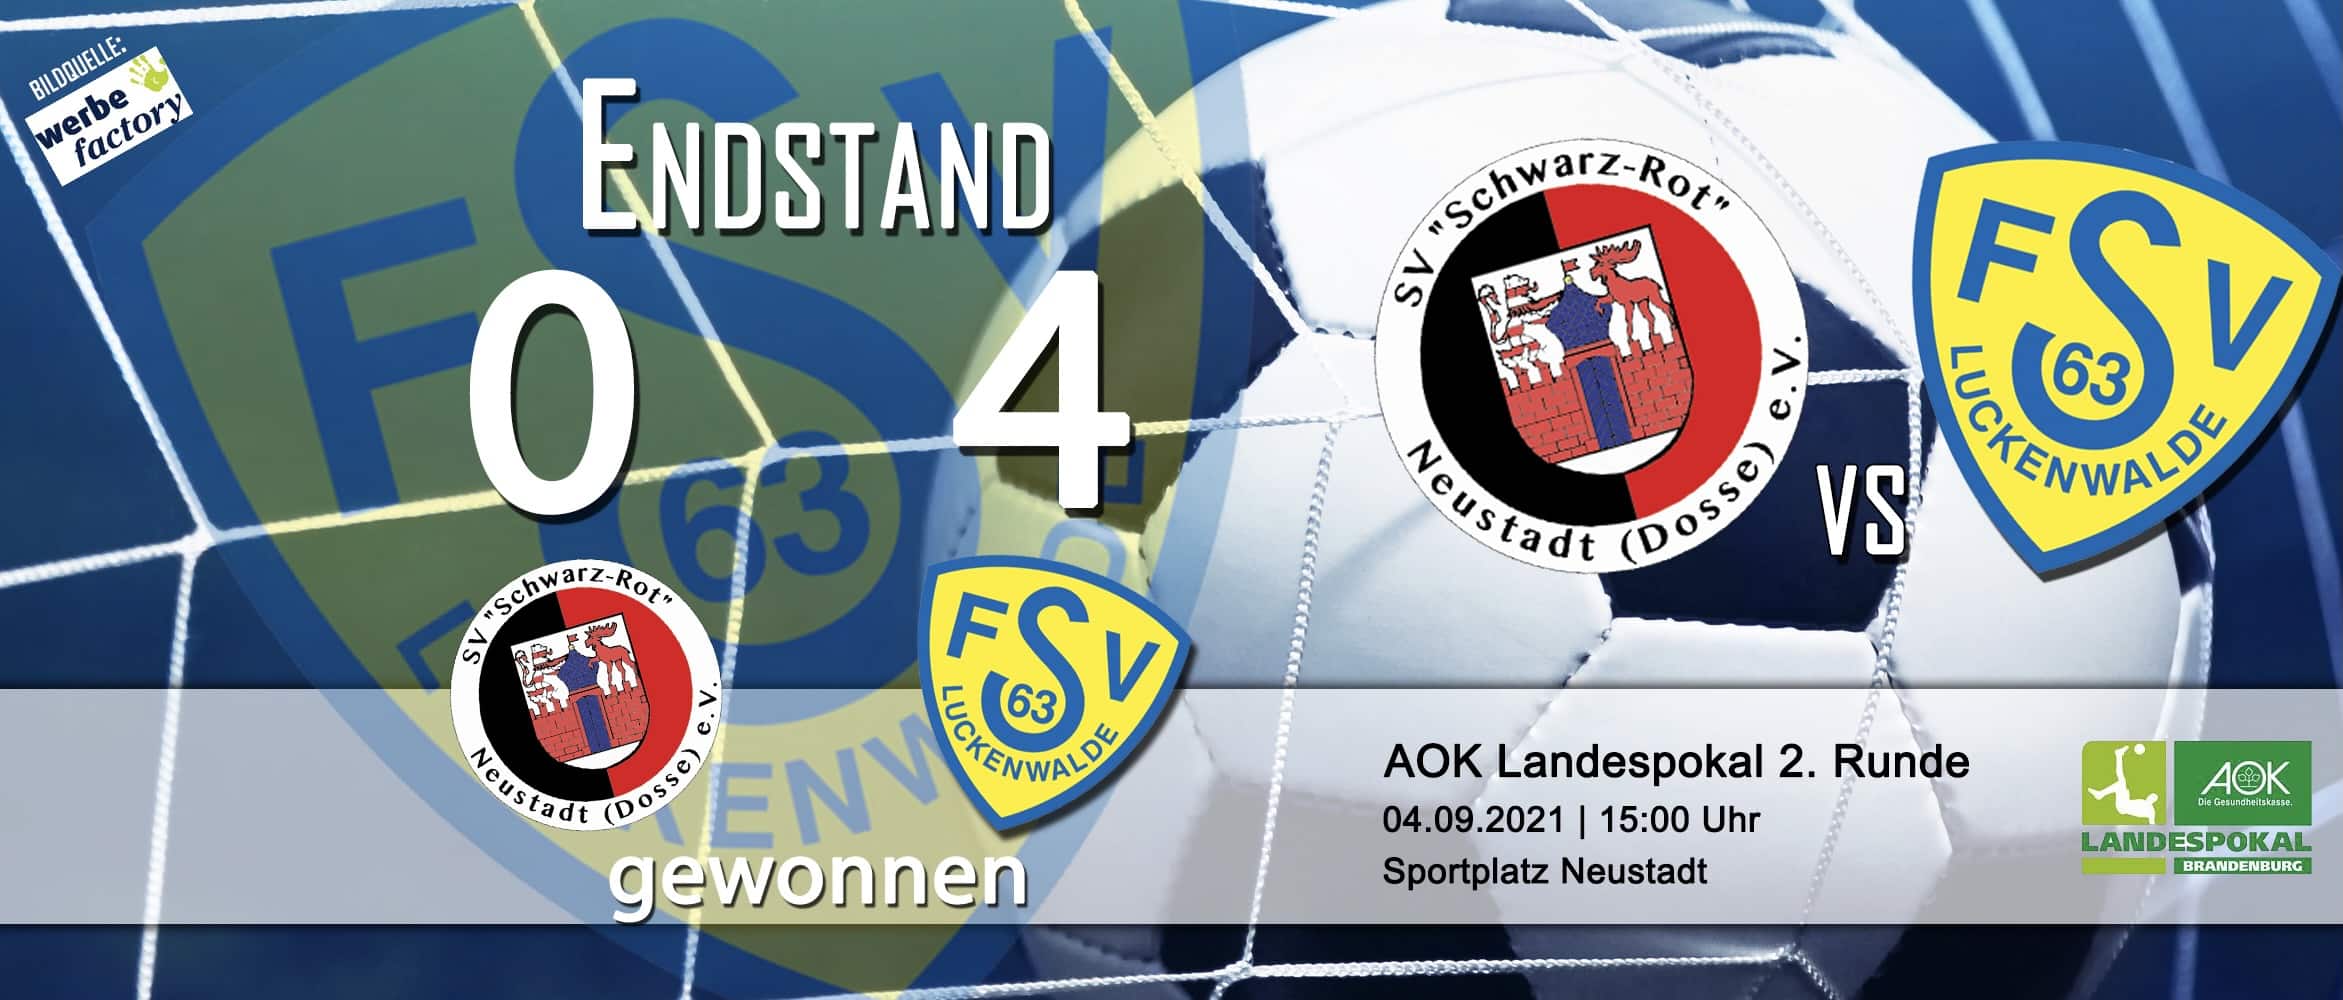 2. Runde im Brandenburger AOK-Landespokal 2